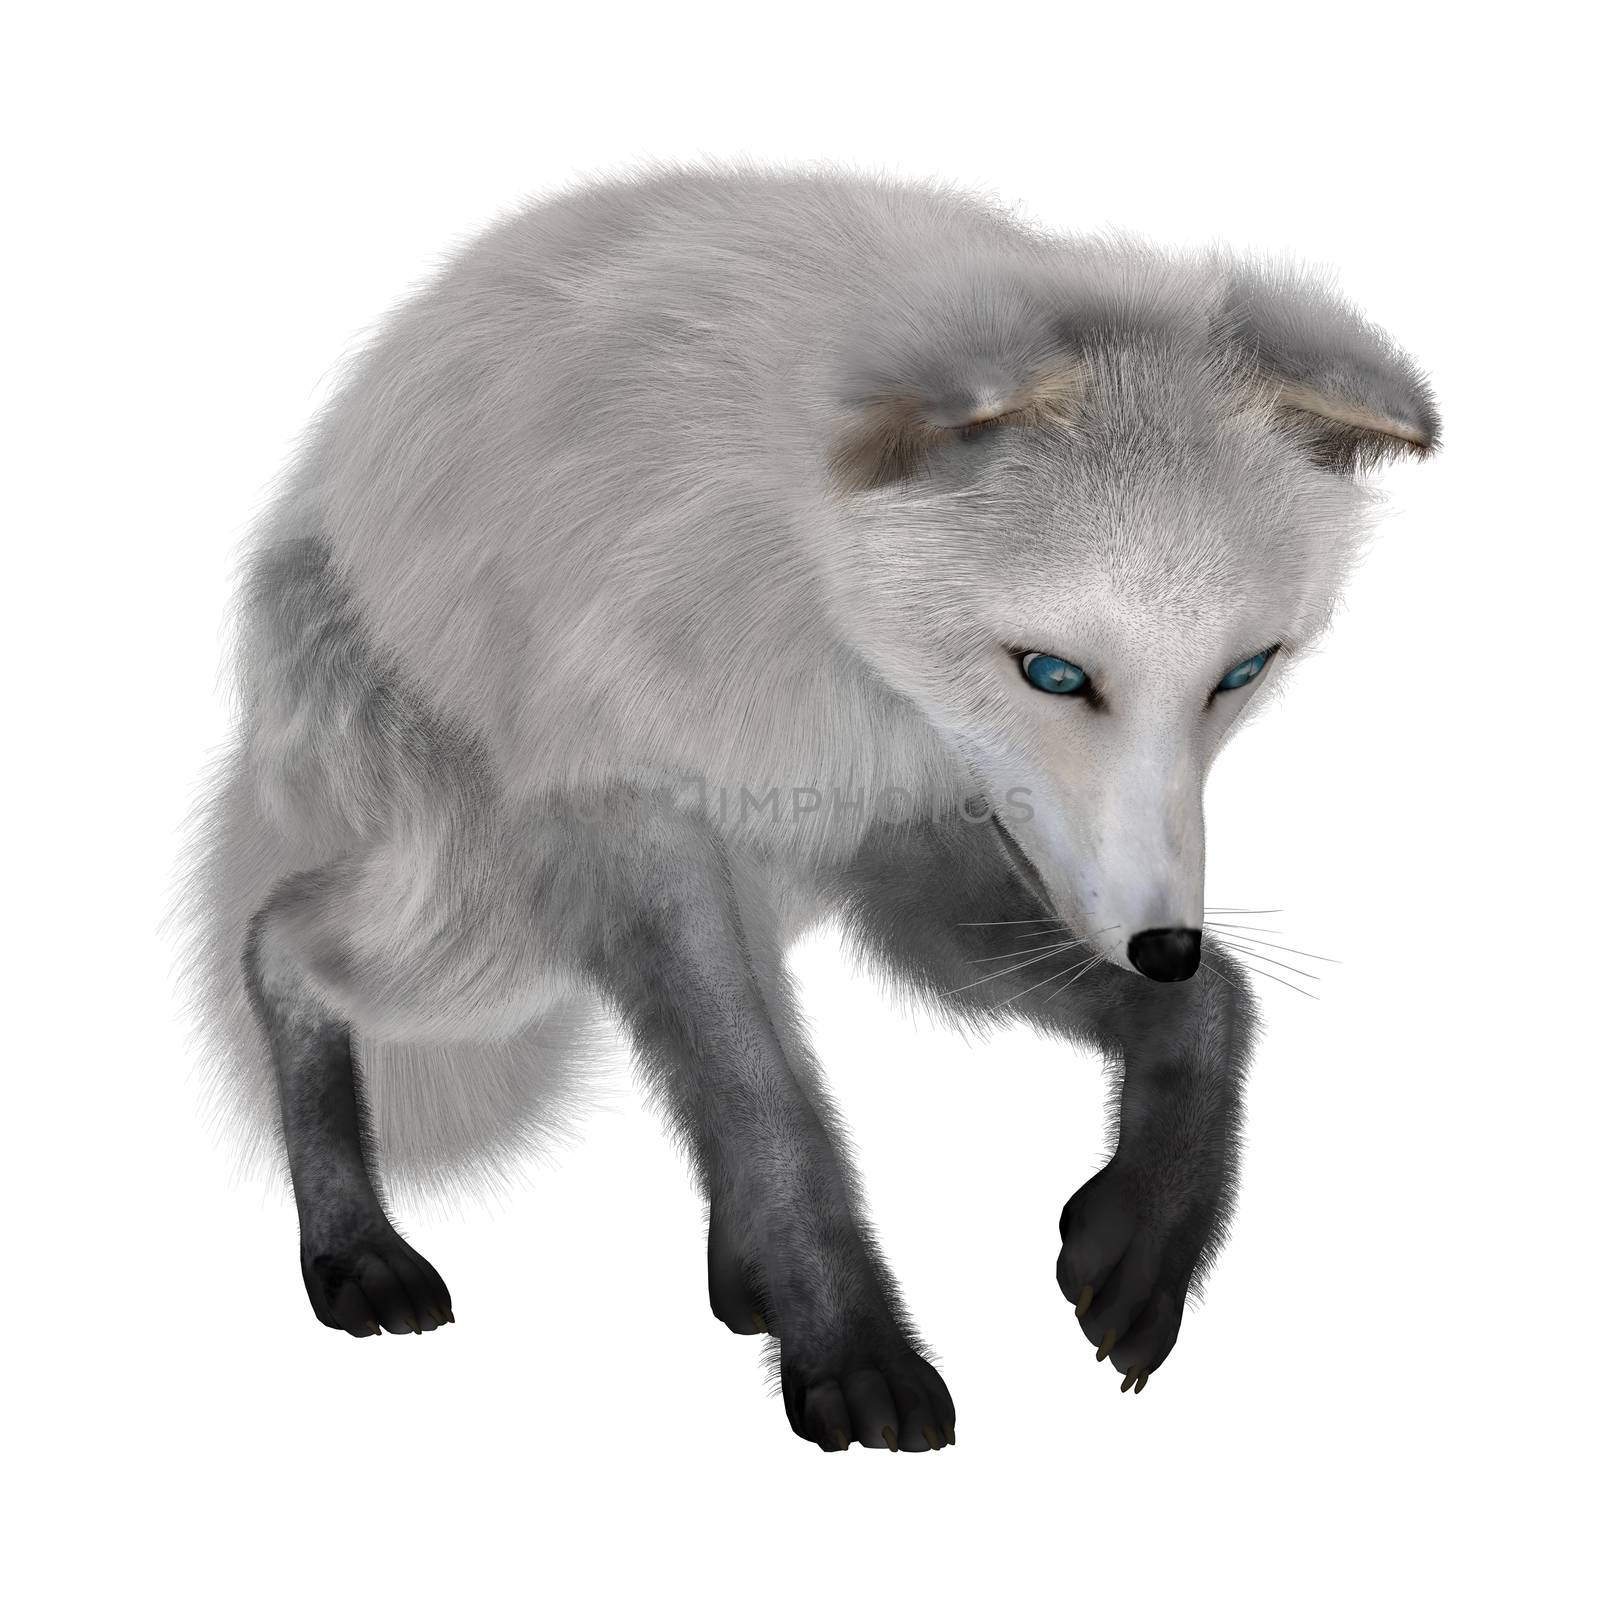 Arctic Fox by Vac